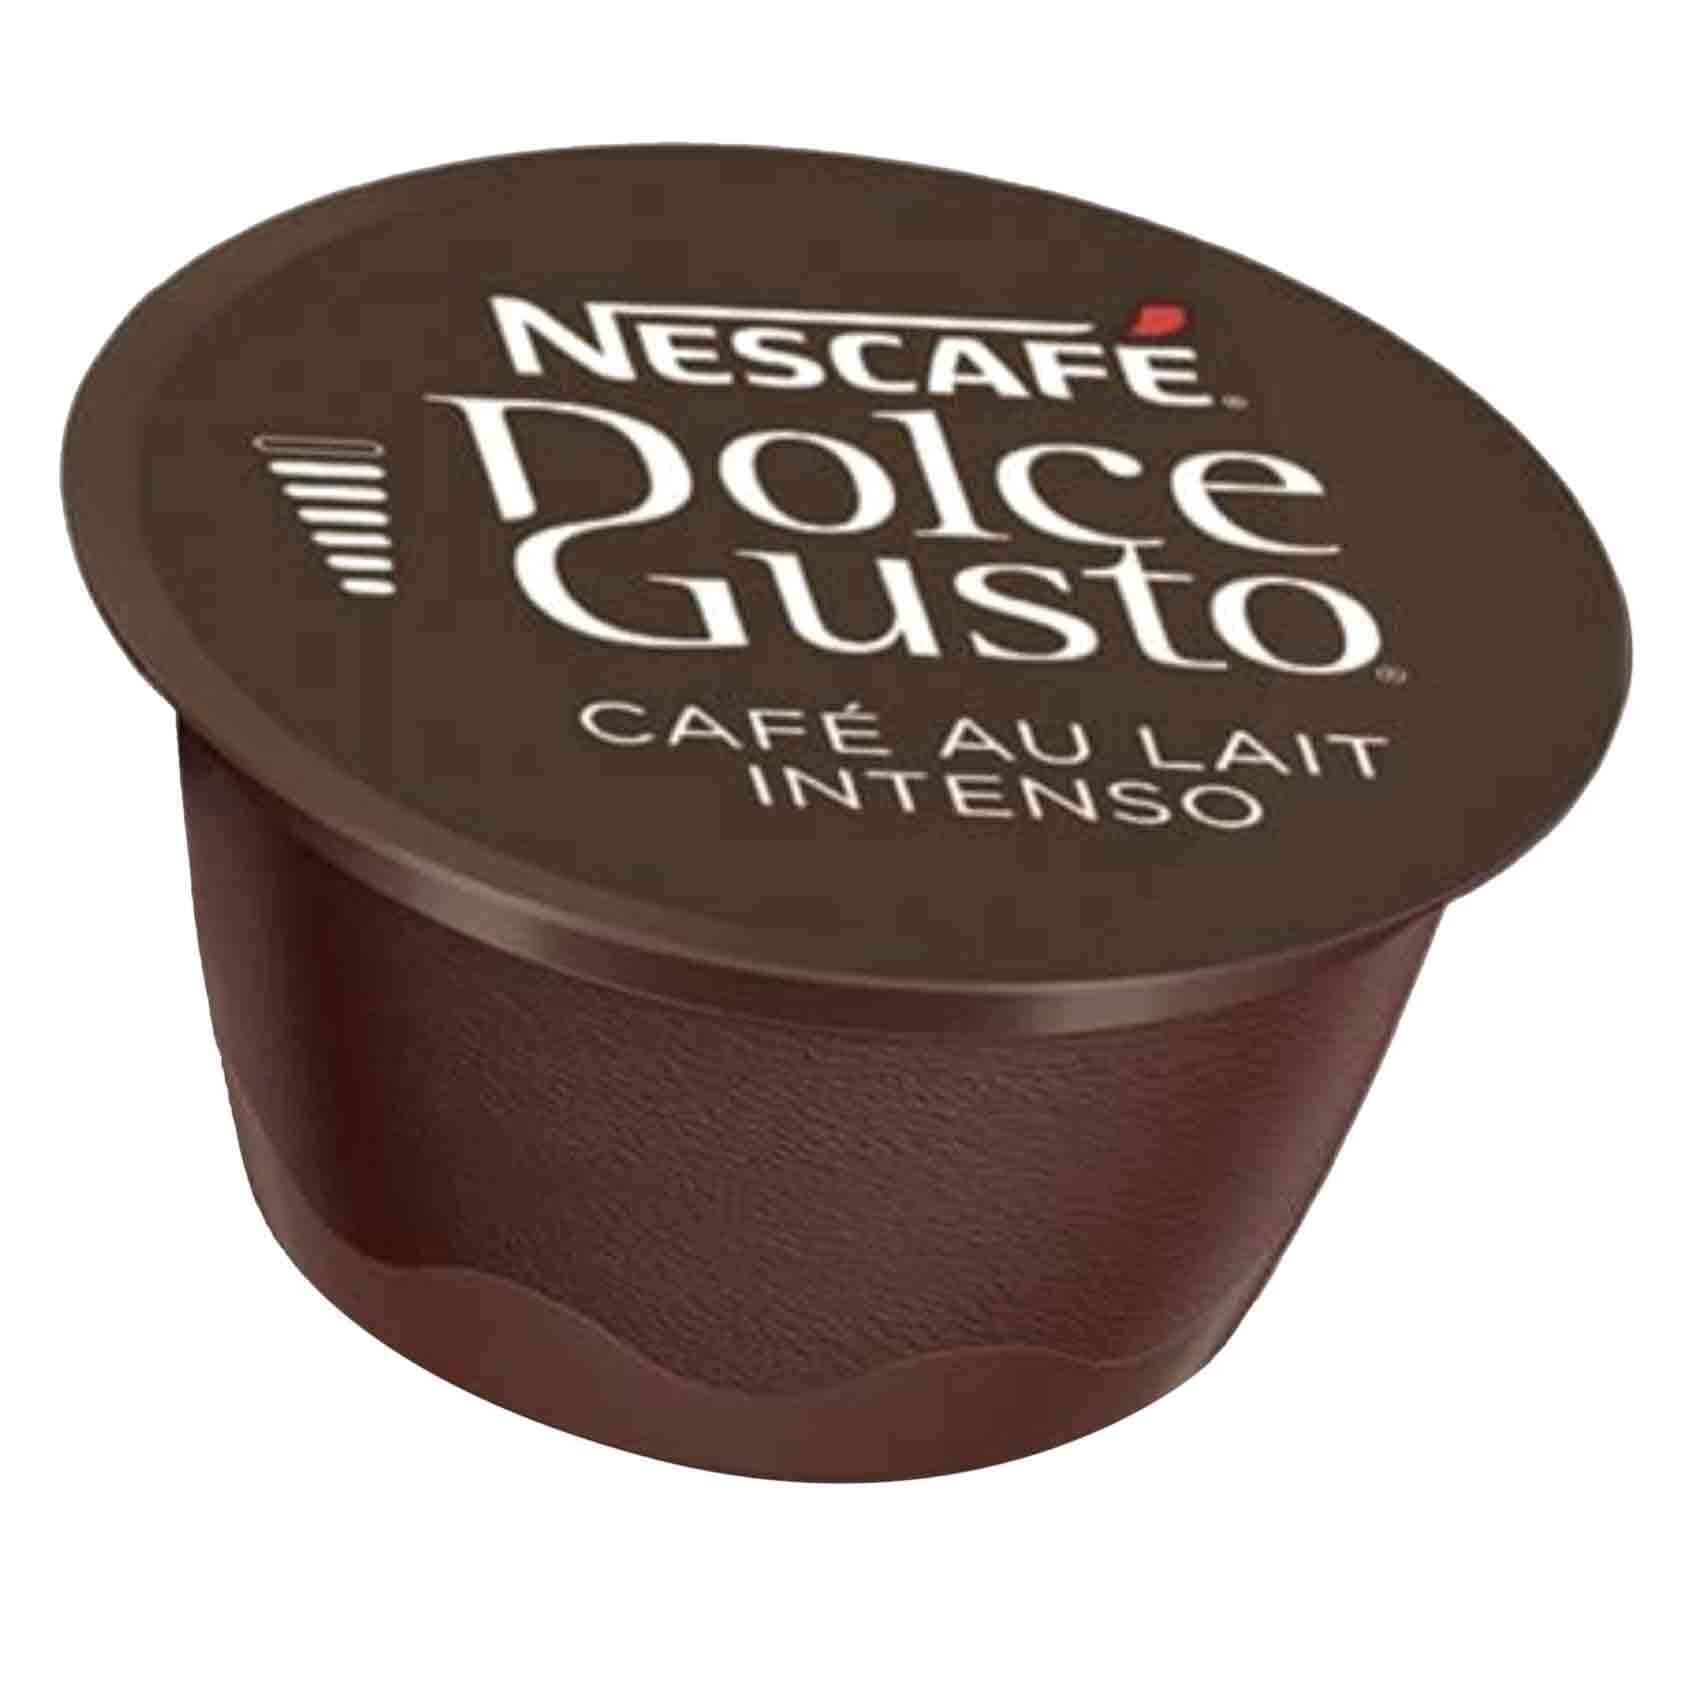 Nescafe Dolce Gusto Cafe Au Lait Capsules